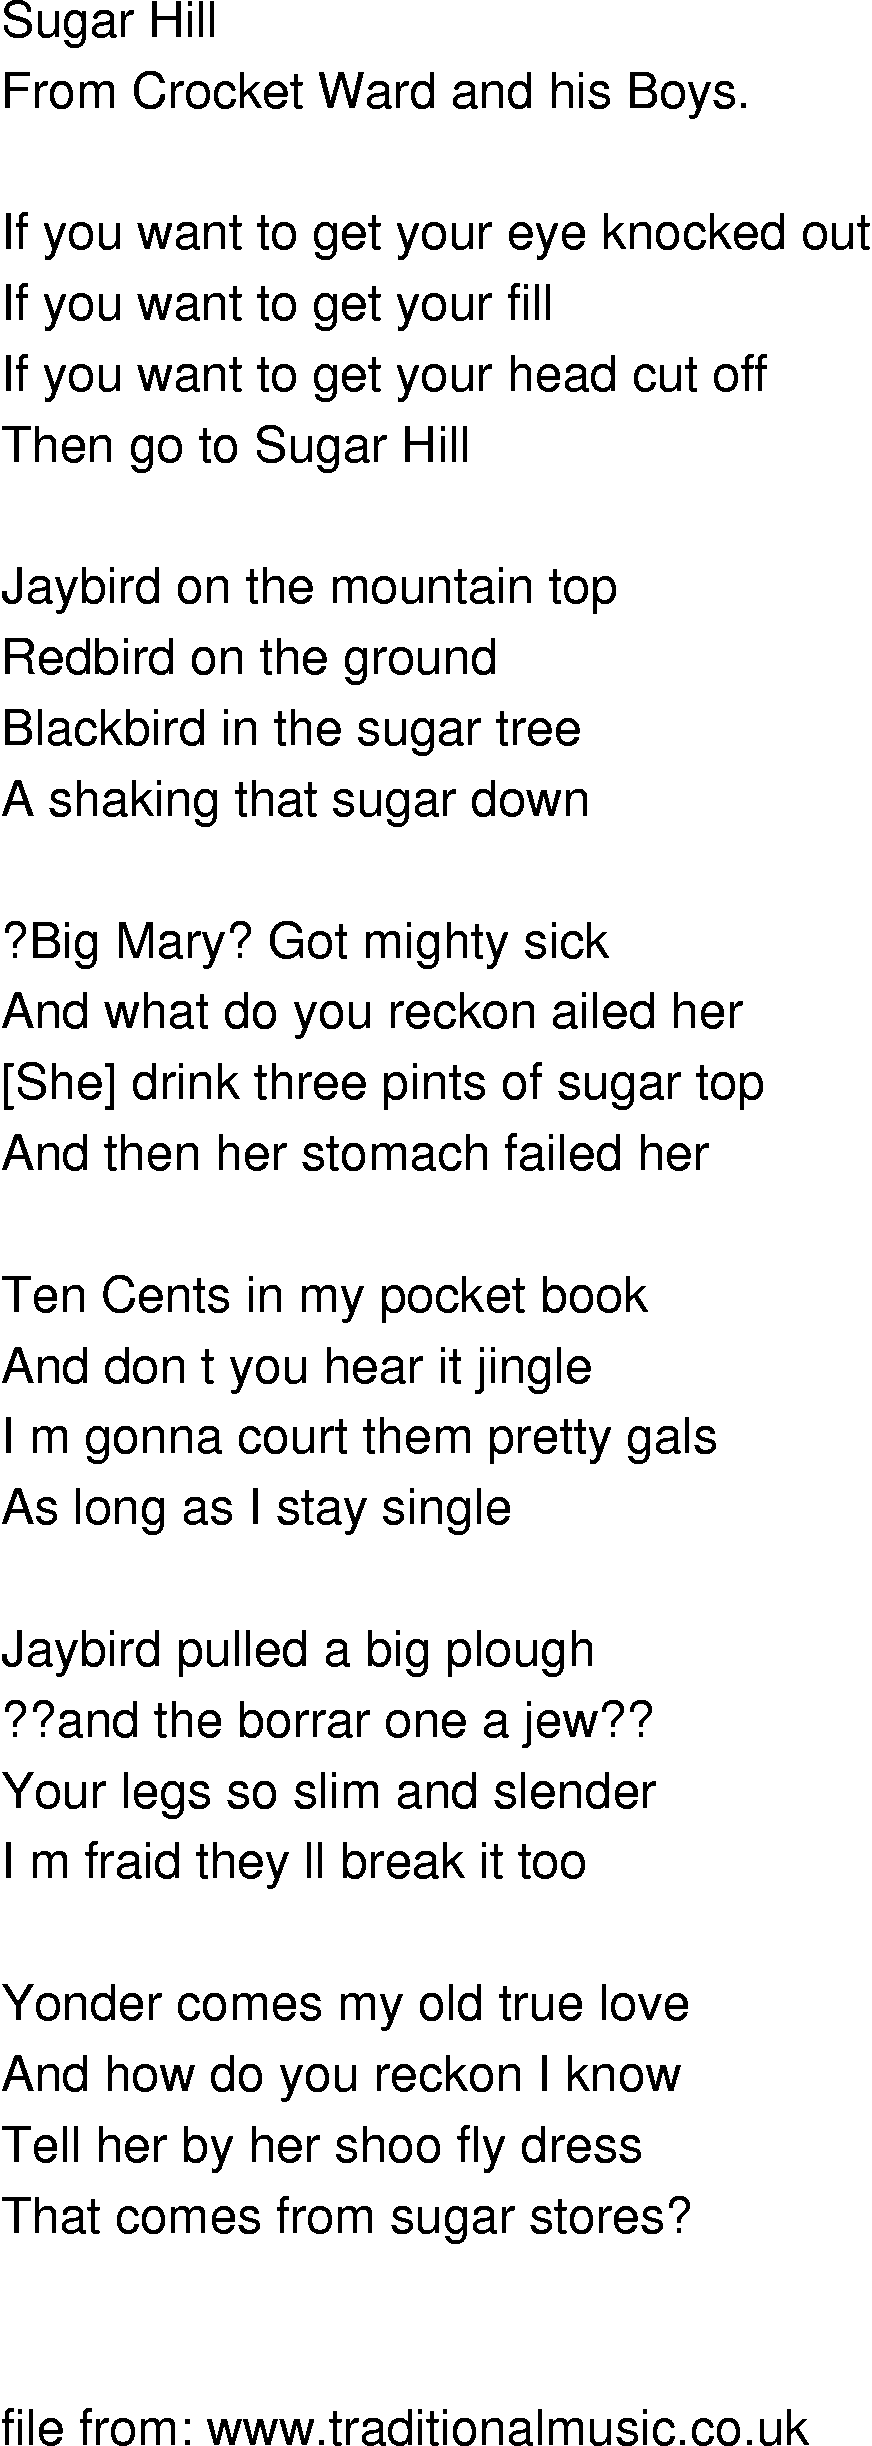 Old-Time (oldtimey) Song Lyrics - sugar hill